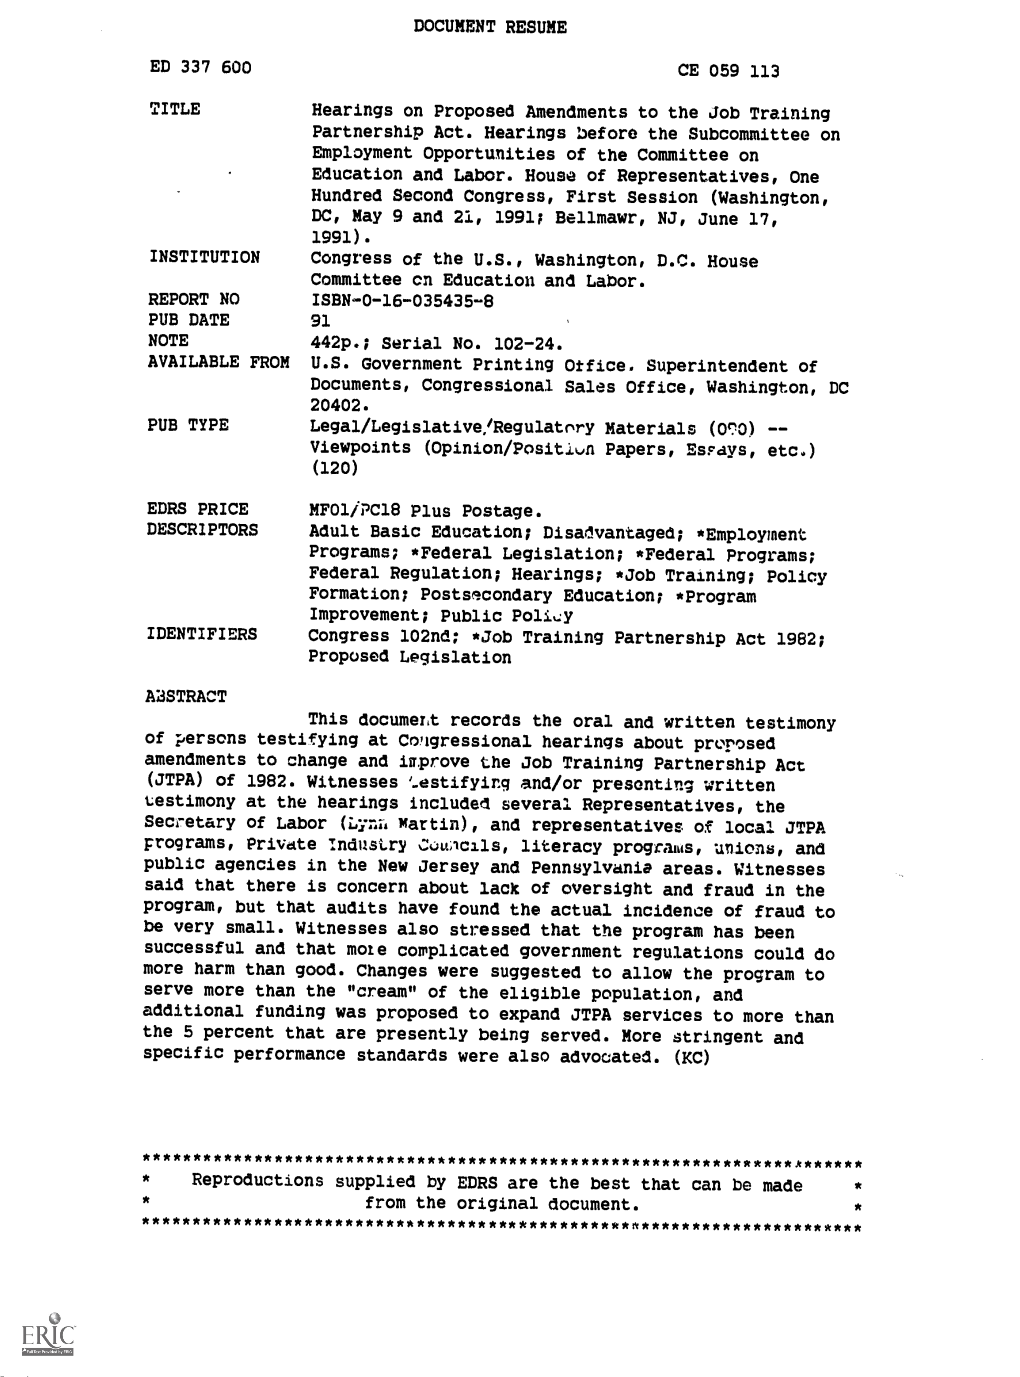 Public Polly IDENTIFIERS Congress 102Nd; *Job Training Partnership Act 1982; Proposed Legislation